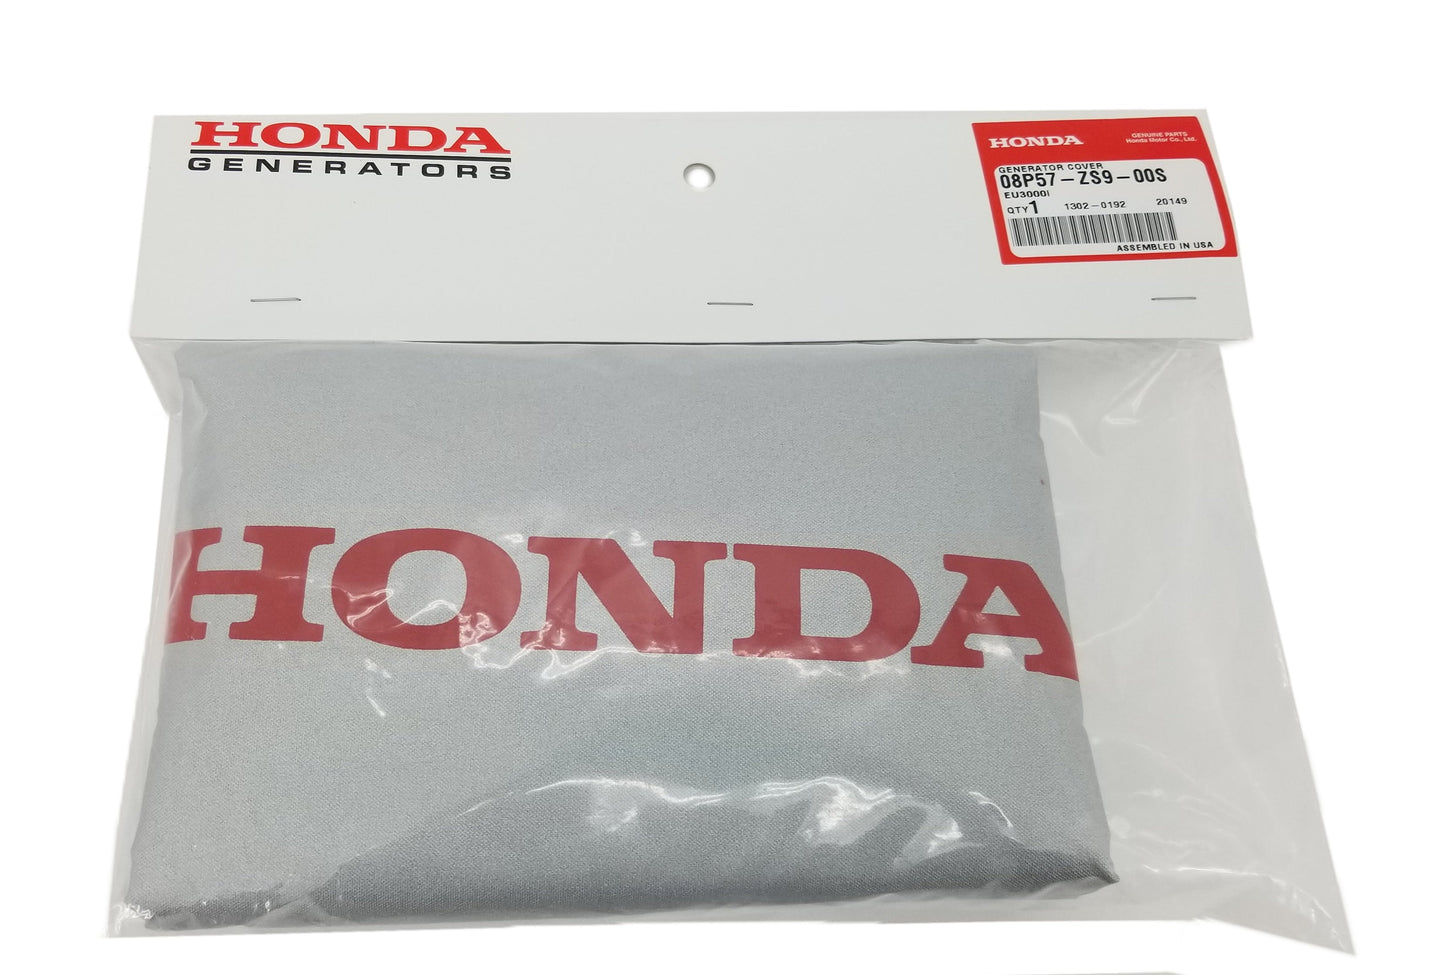 Honda EU3000is Generator Silver Cover - 08P57-ZS9-00S